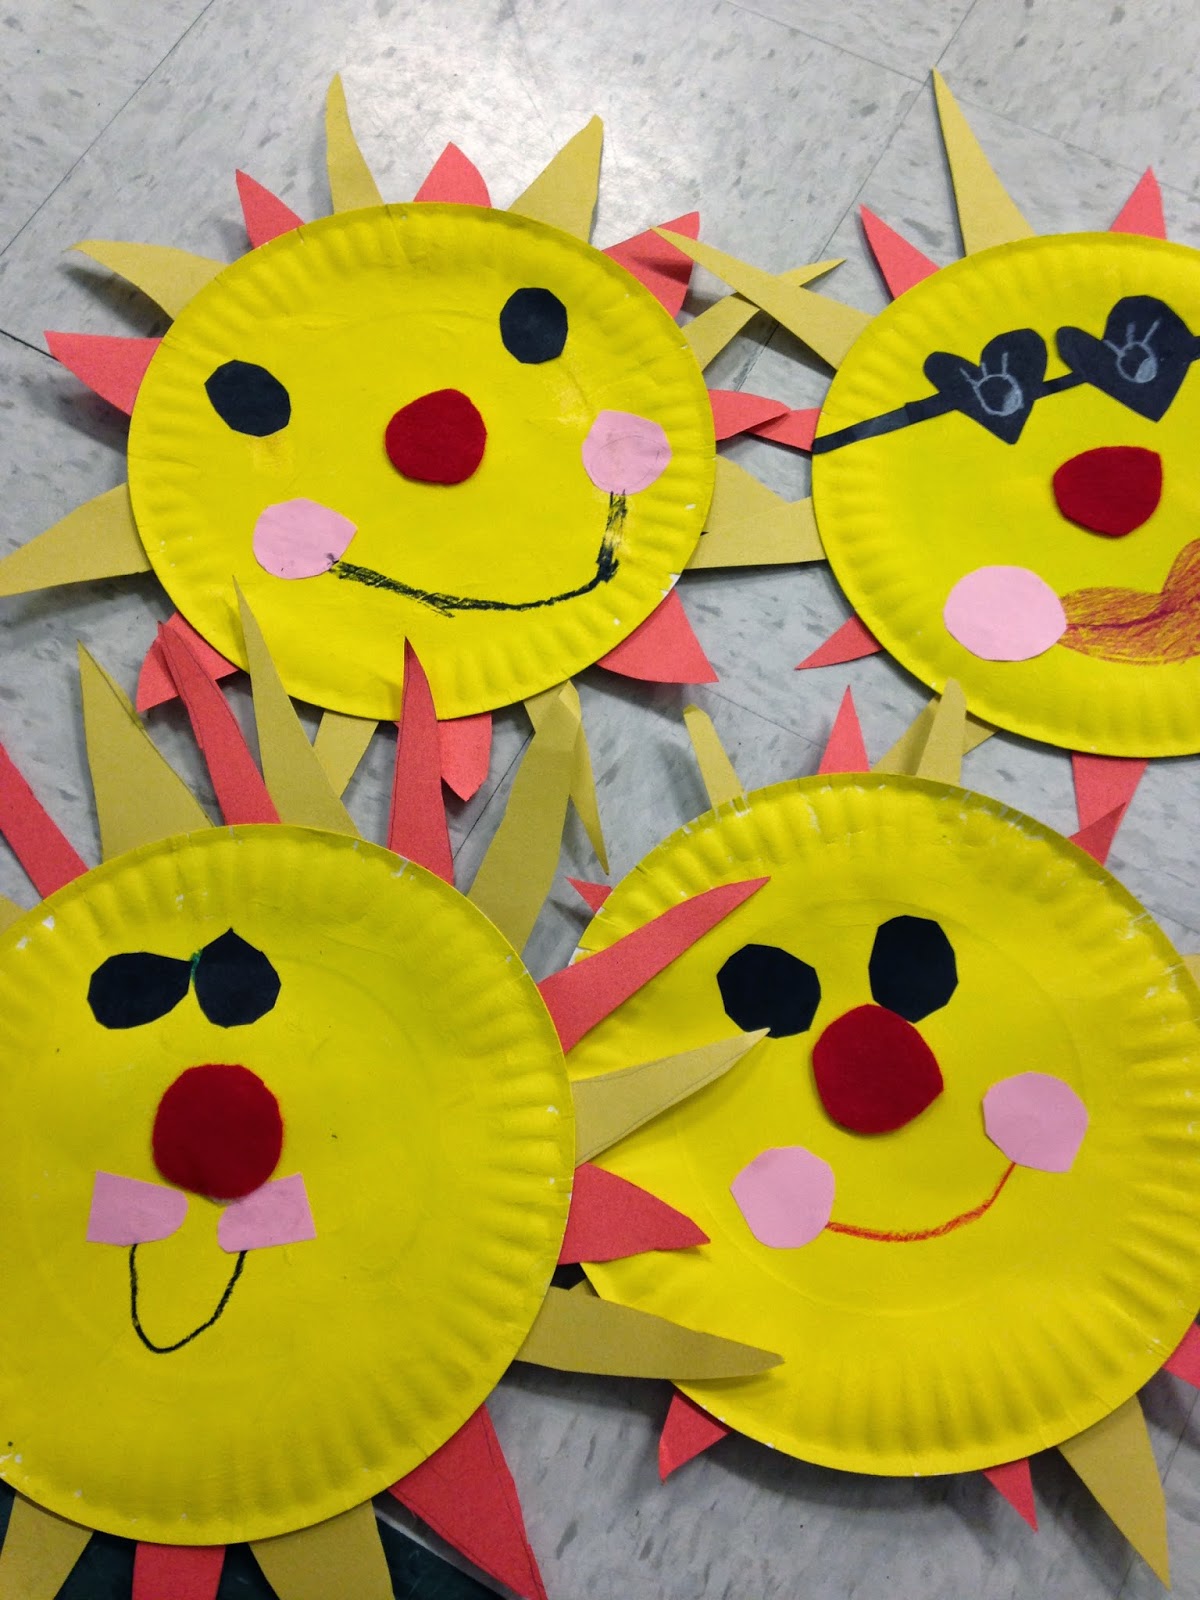 Summer Craft Ideas For Preschoolers - 11 Explore top designs created